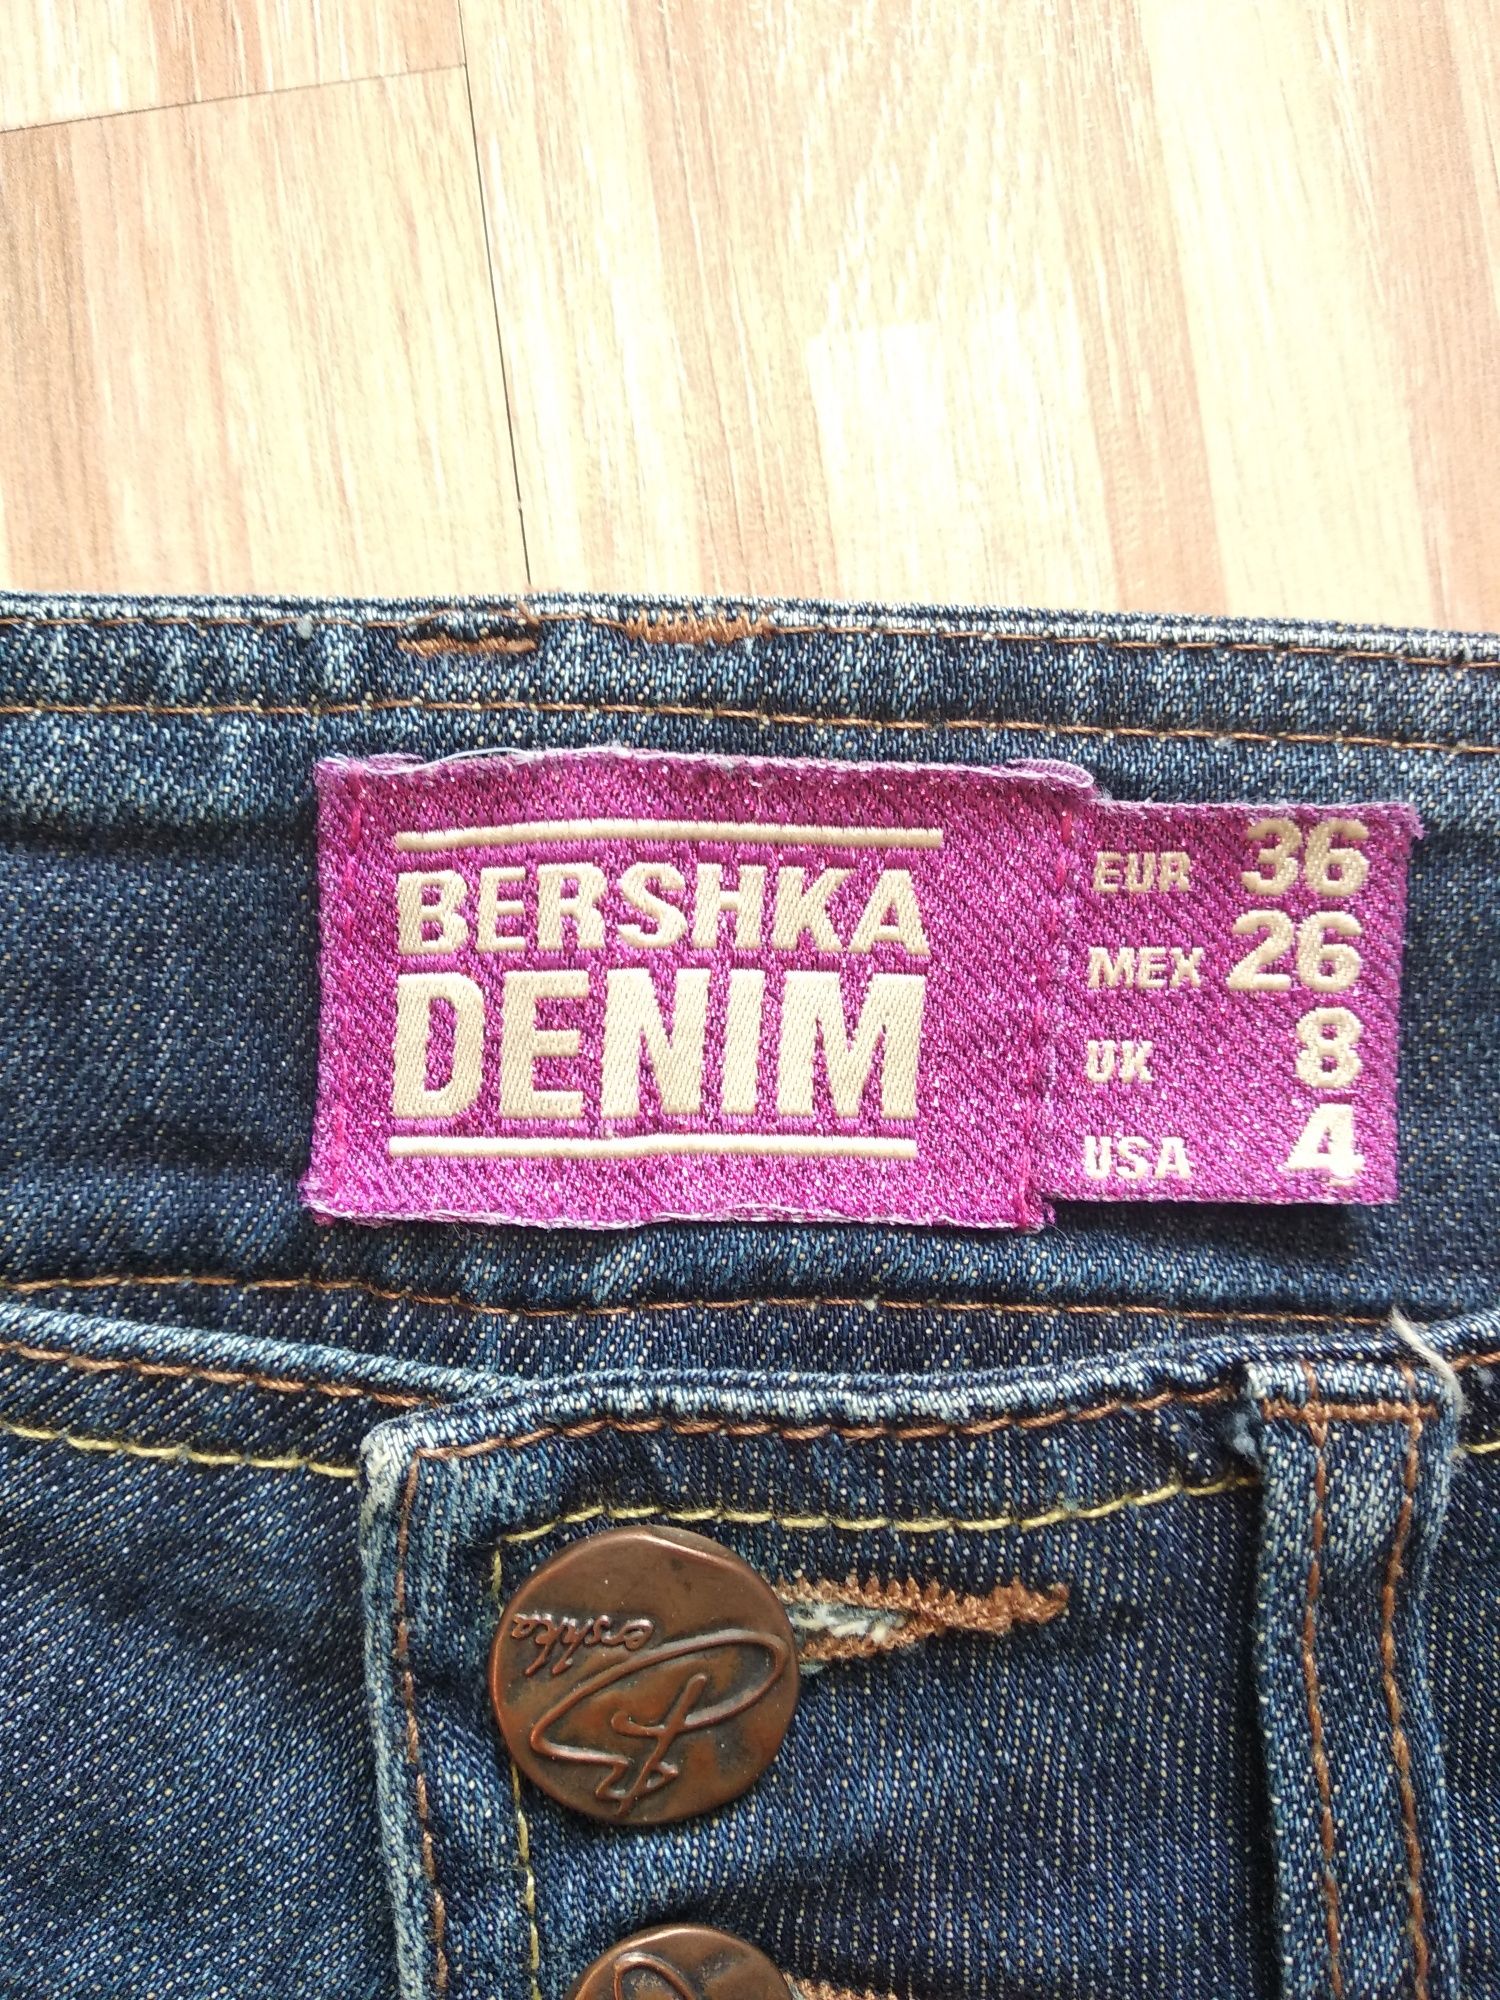 Jeansowa spódnica Bershka, rozmiar 36